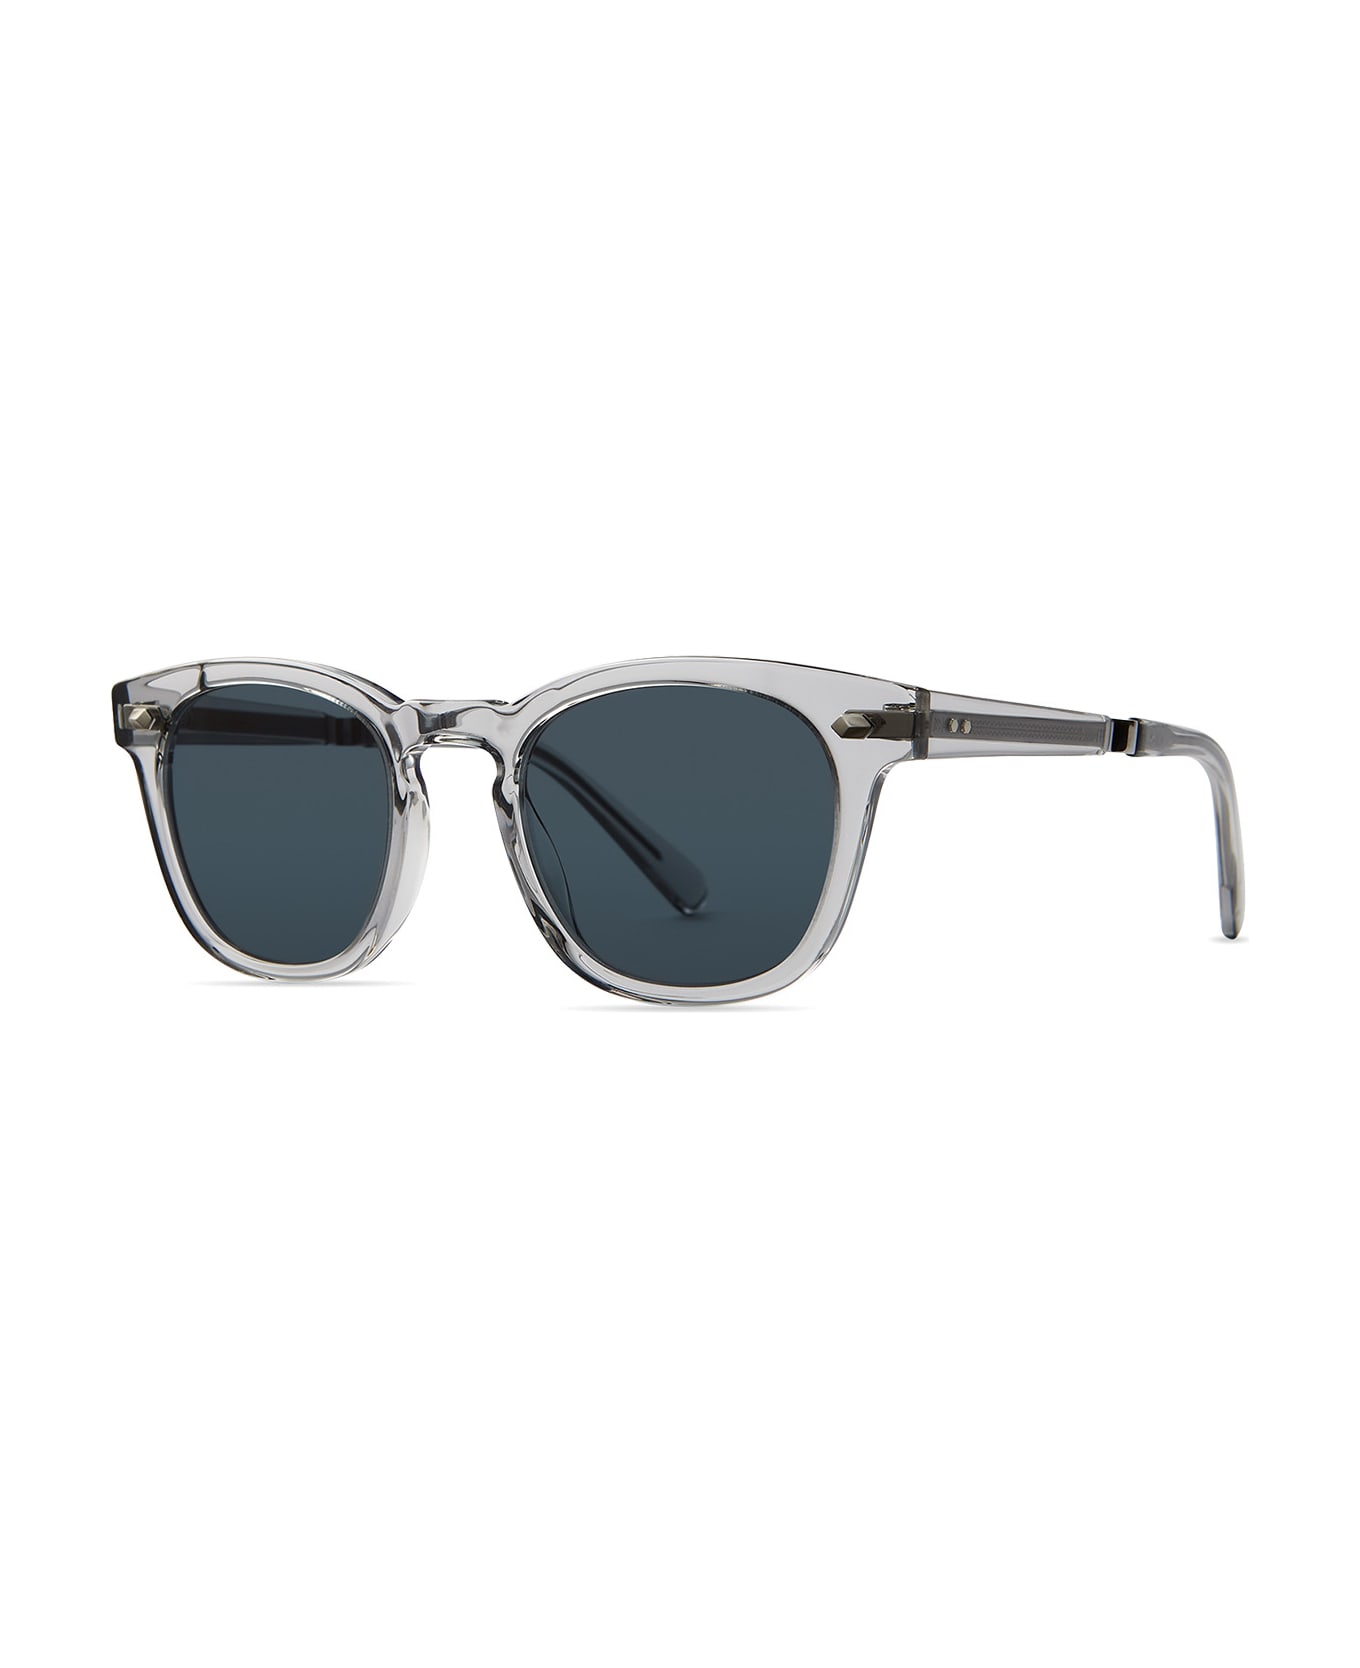 Mr. Leight Hanalei S Greystone-platinum Sunglasses - Greystone-Platinum